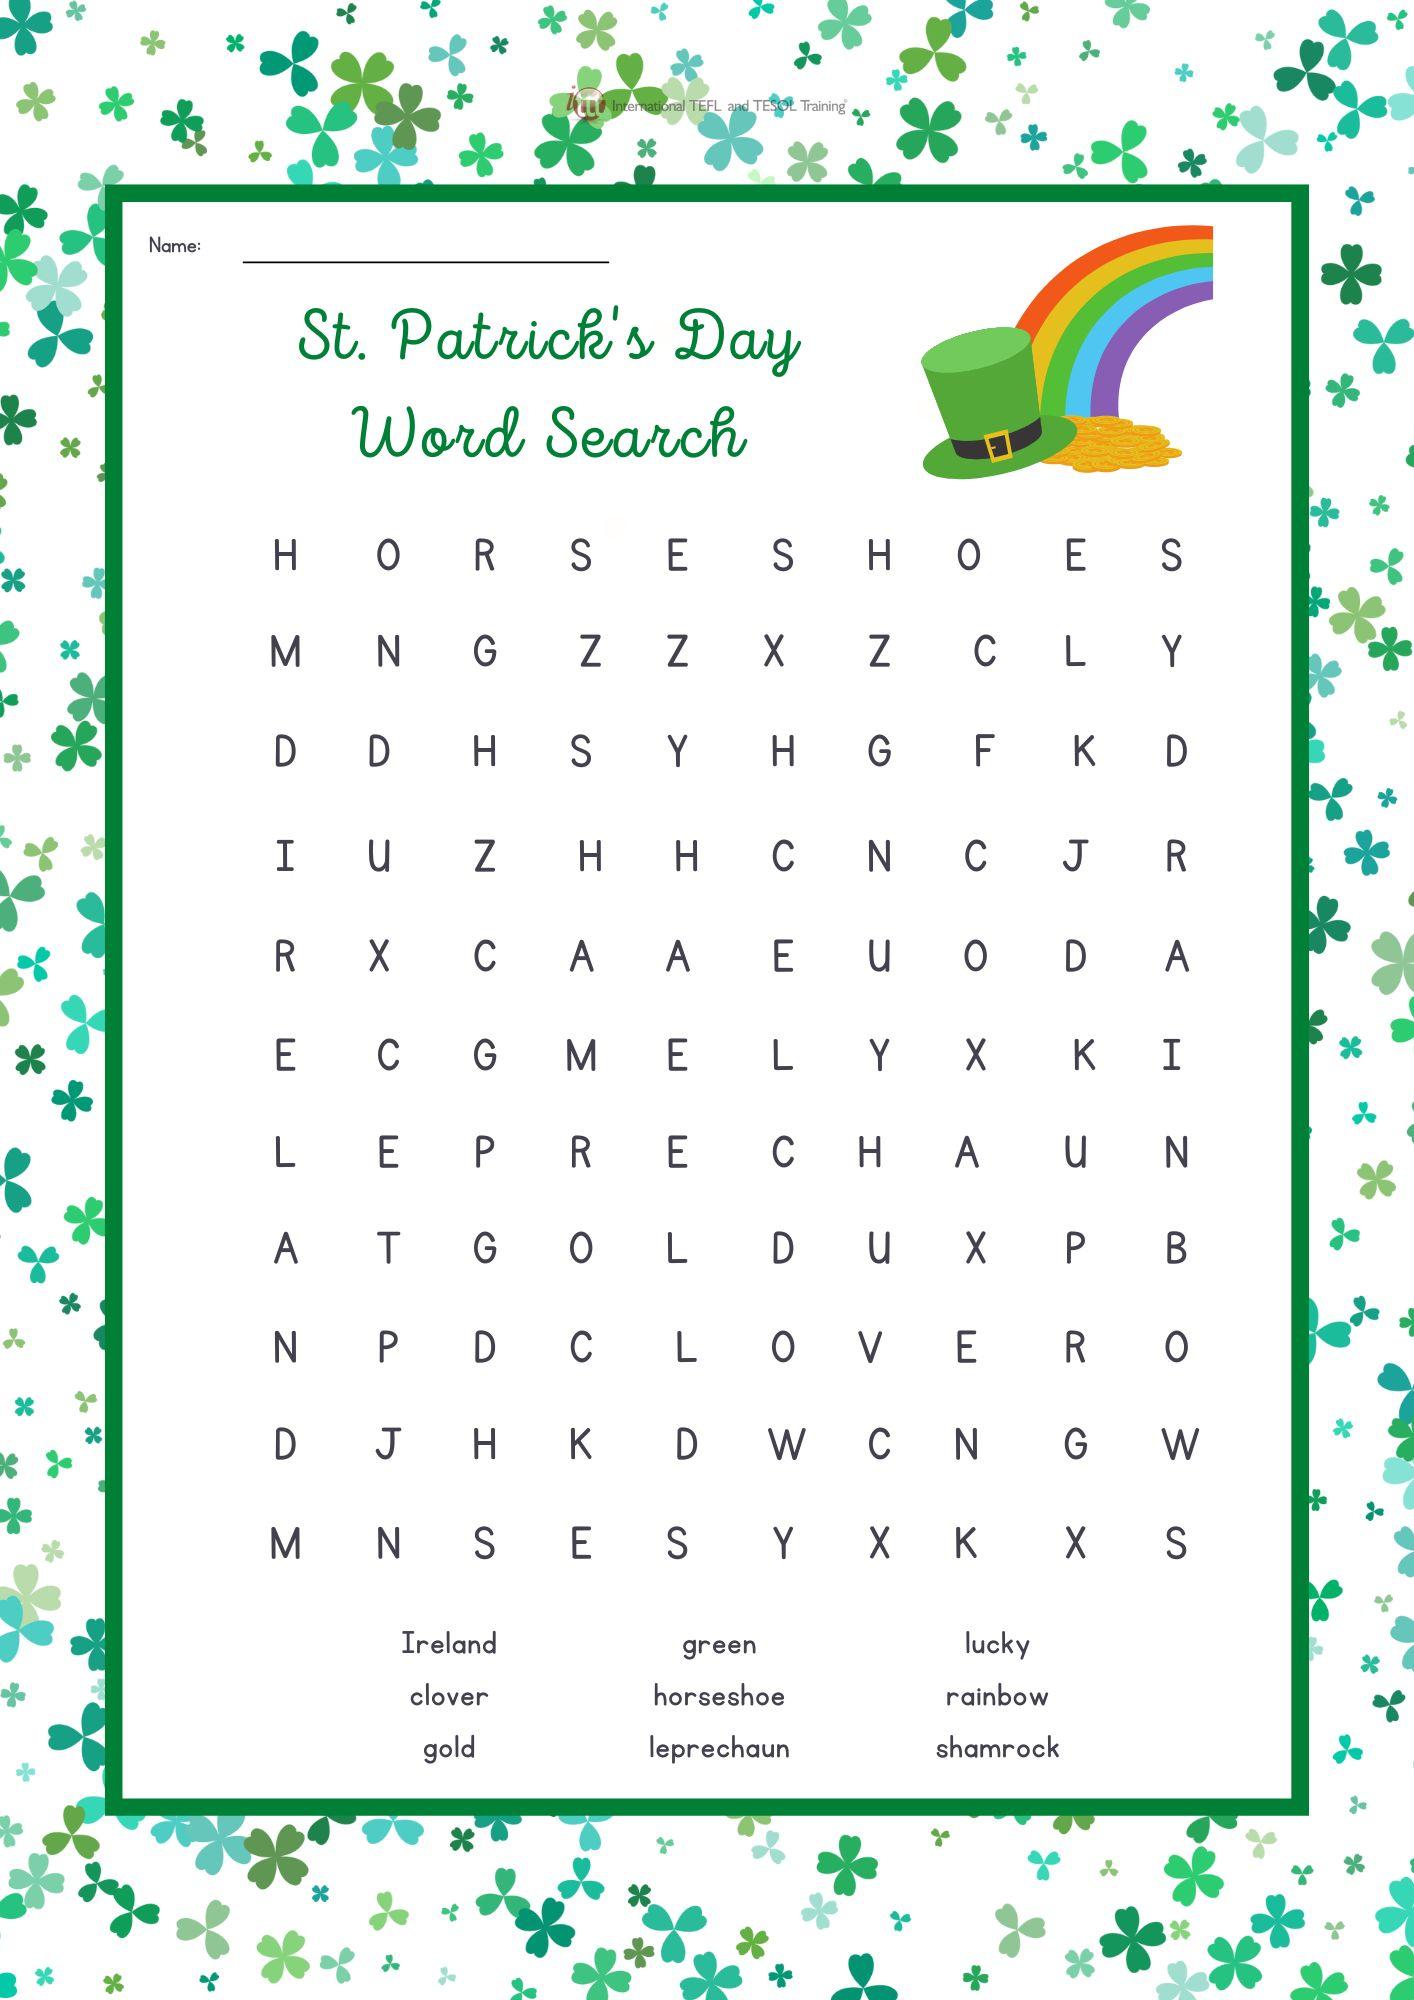 Grammar Corner St. Patrick's Day Word Search